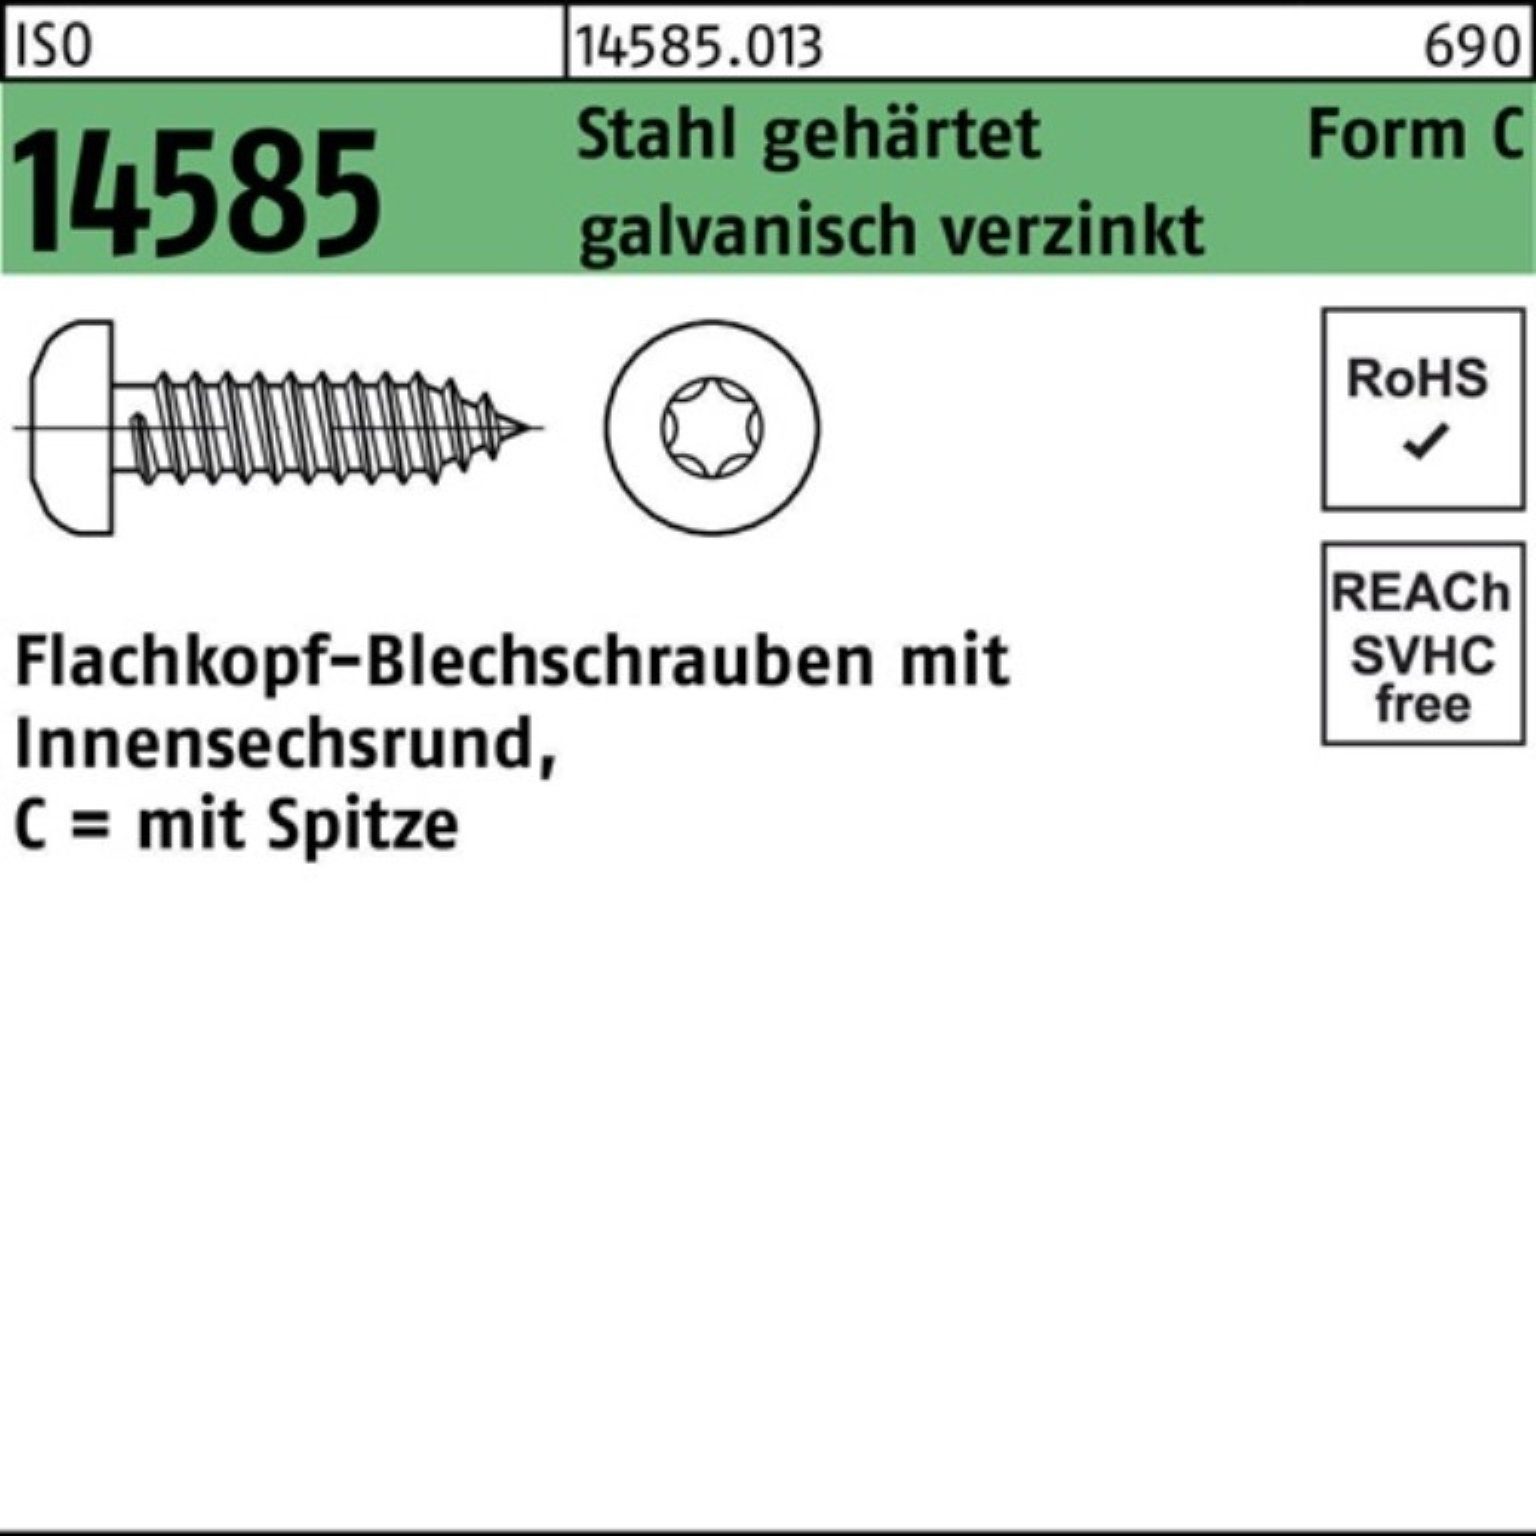 geh ISR/Spitze Blechschraube ISO Blechschraube Stahl Pack Reyher -C-T20 1000er 3,9x13 14585